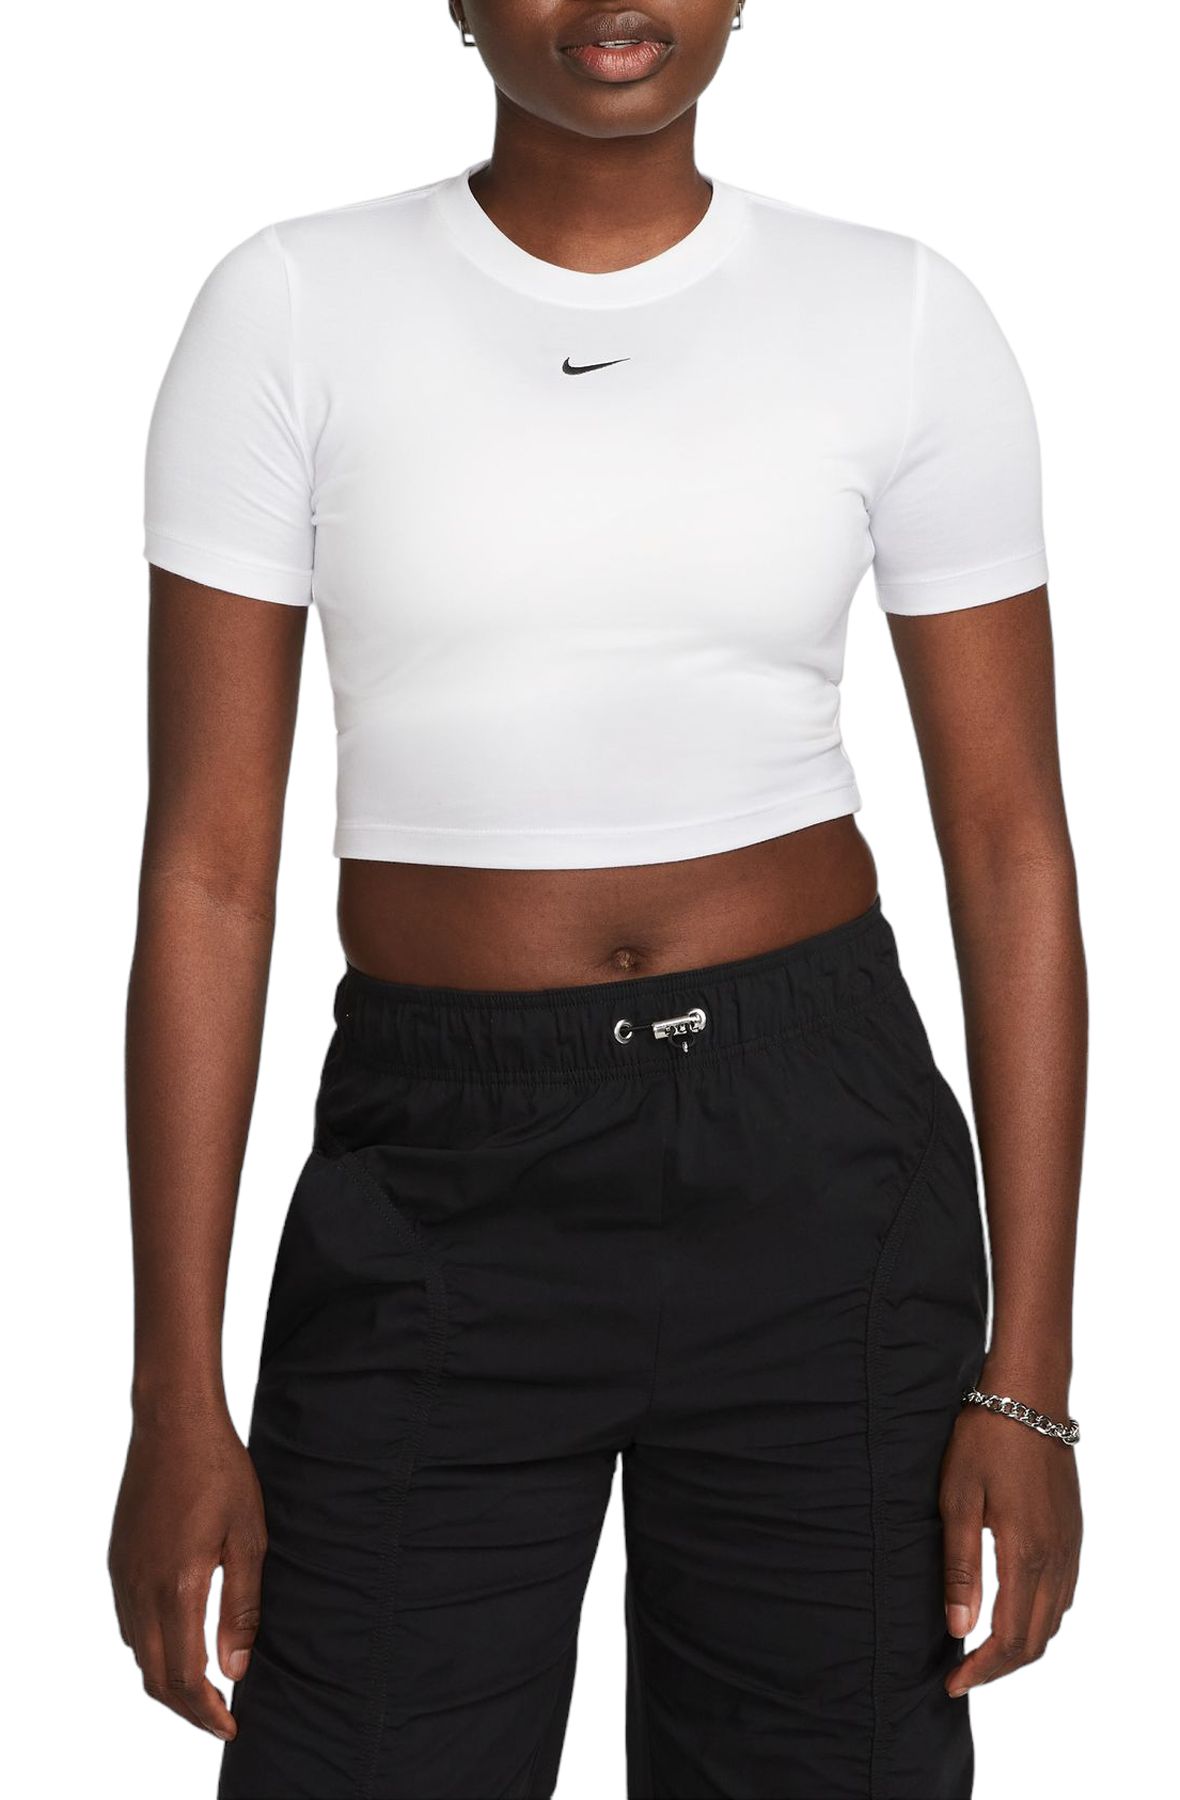 Nike Women's Sportswear Cropped Basketball Jersey, XL, White